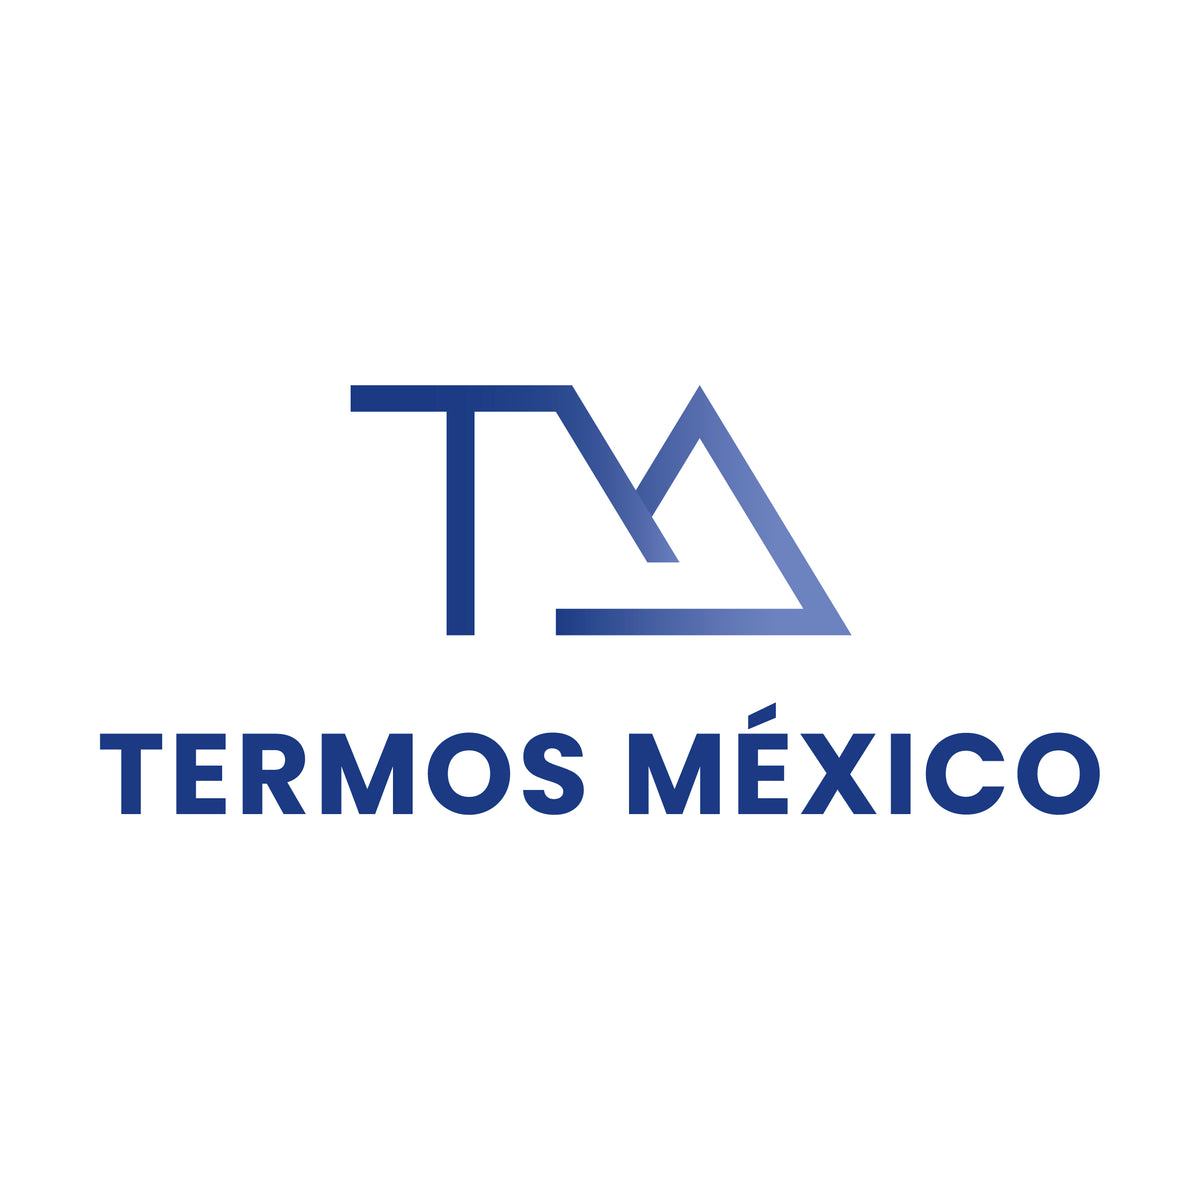 Termos Mexico - YETI MEXICO - RTIC MEXICO — Termos Yeti Mexico